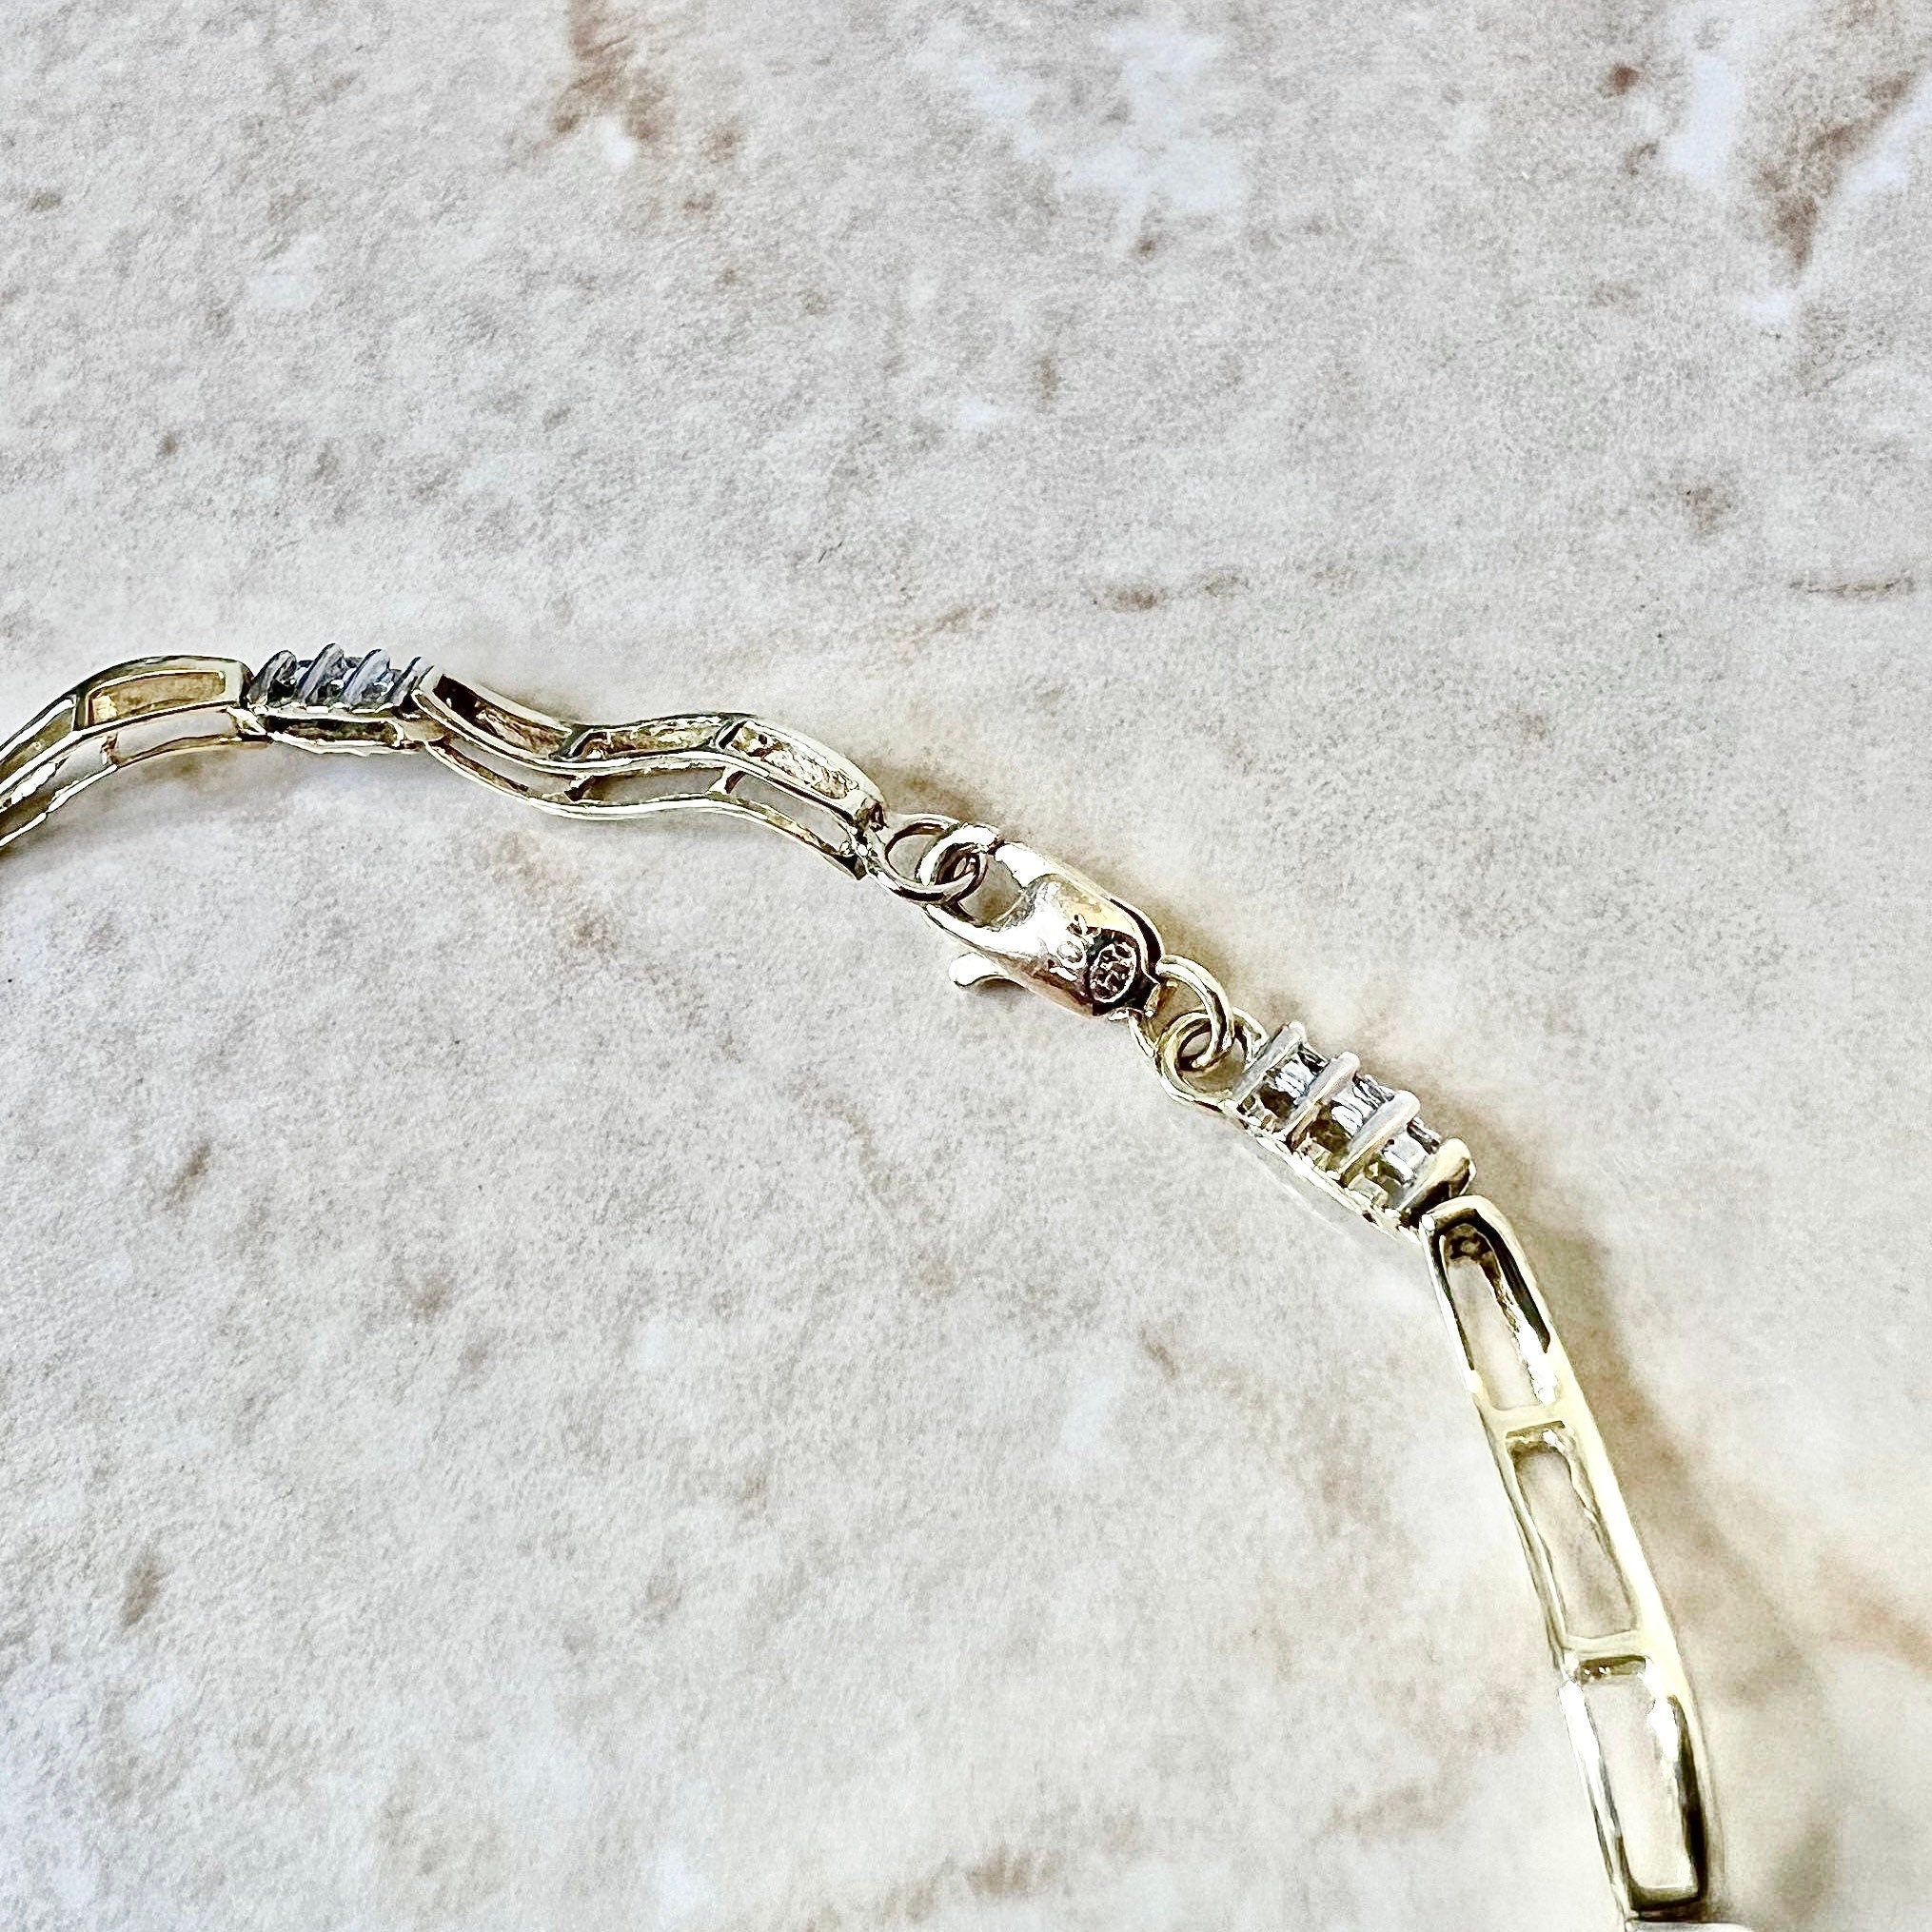 Sold at Auction: 10 Carat Gold Diamond Charm Bracelet